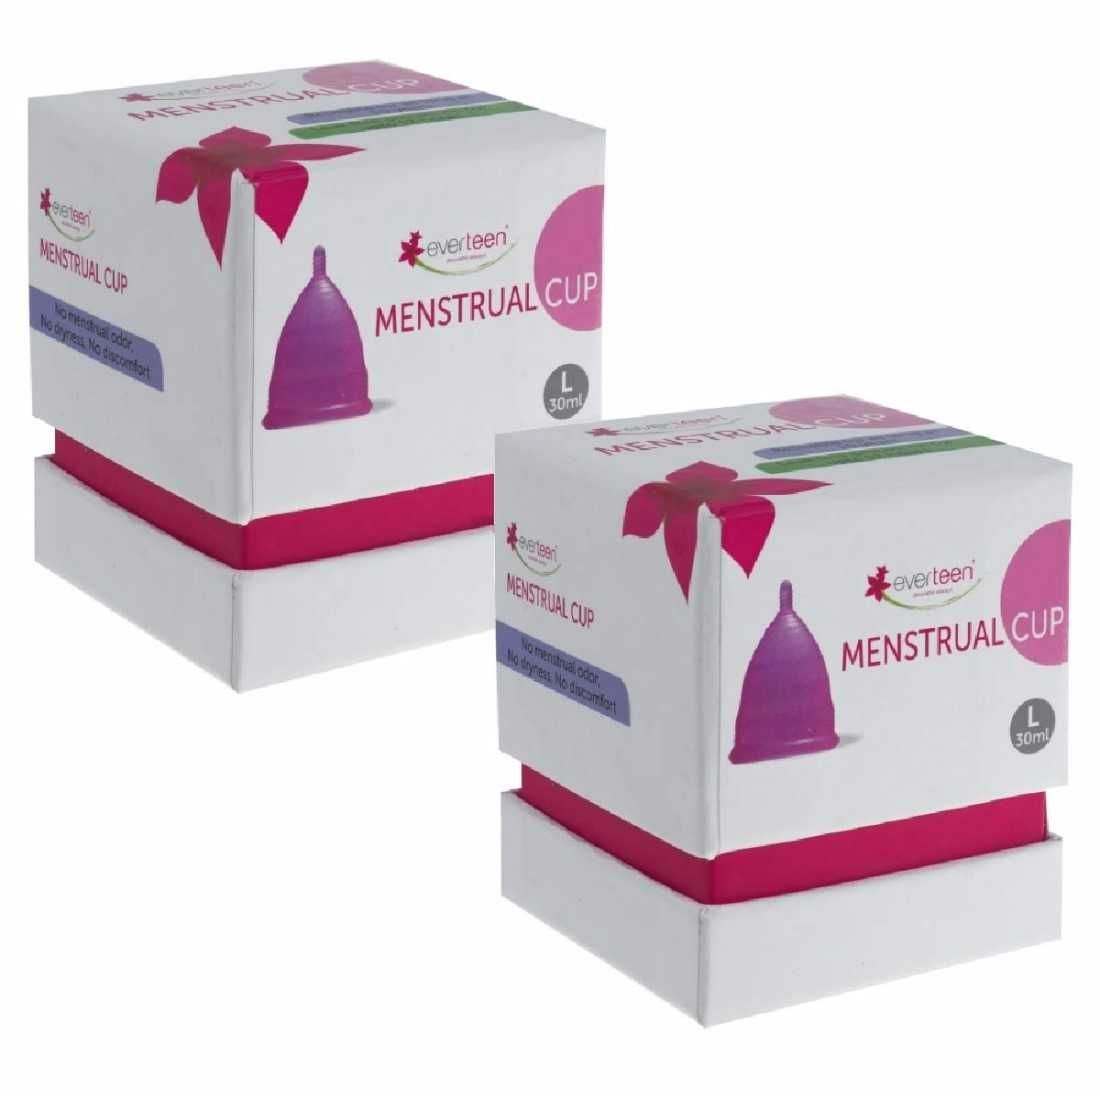 Buy everteen Large Menstrual Cup for Periods in Women - 2 Packs (30ml capacity each) - Purplle